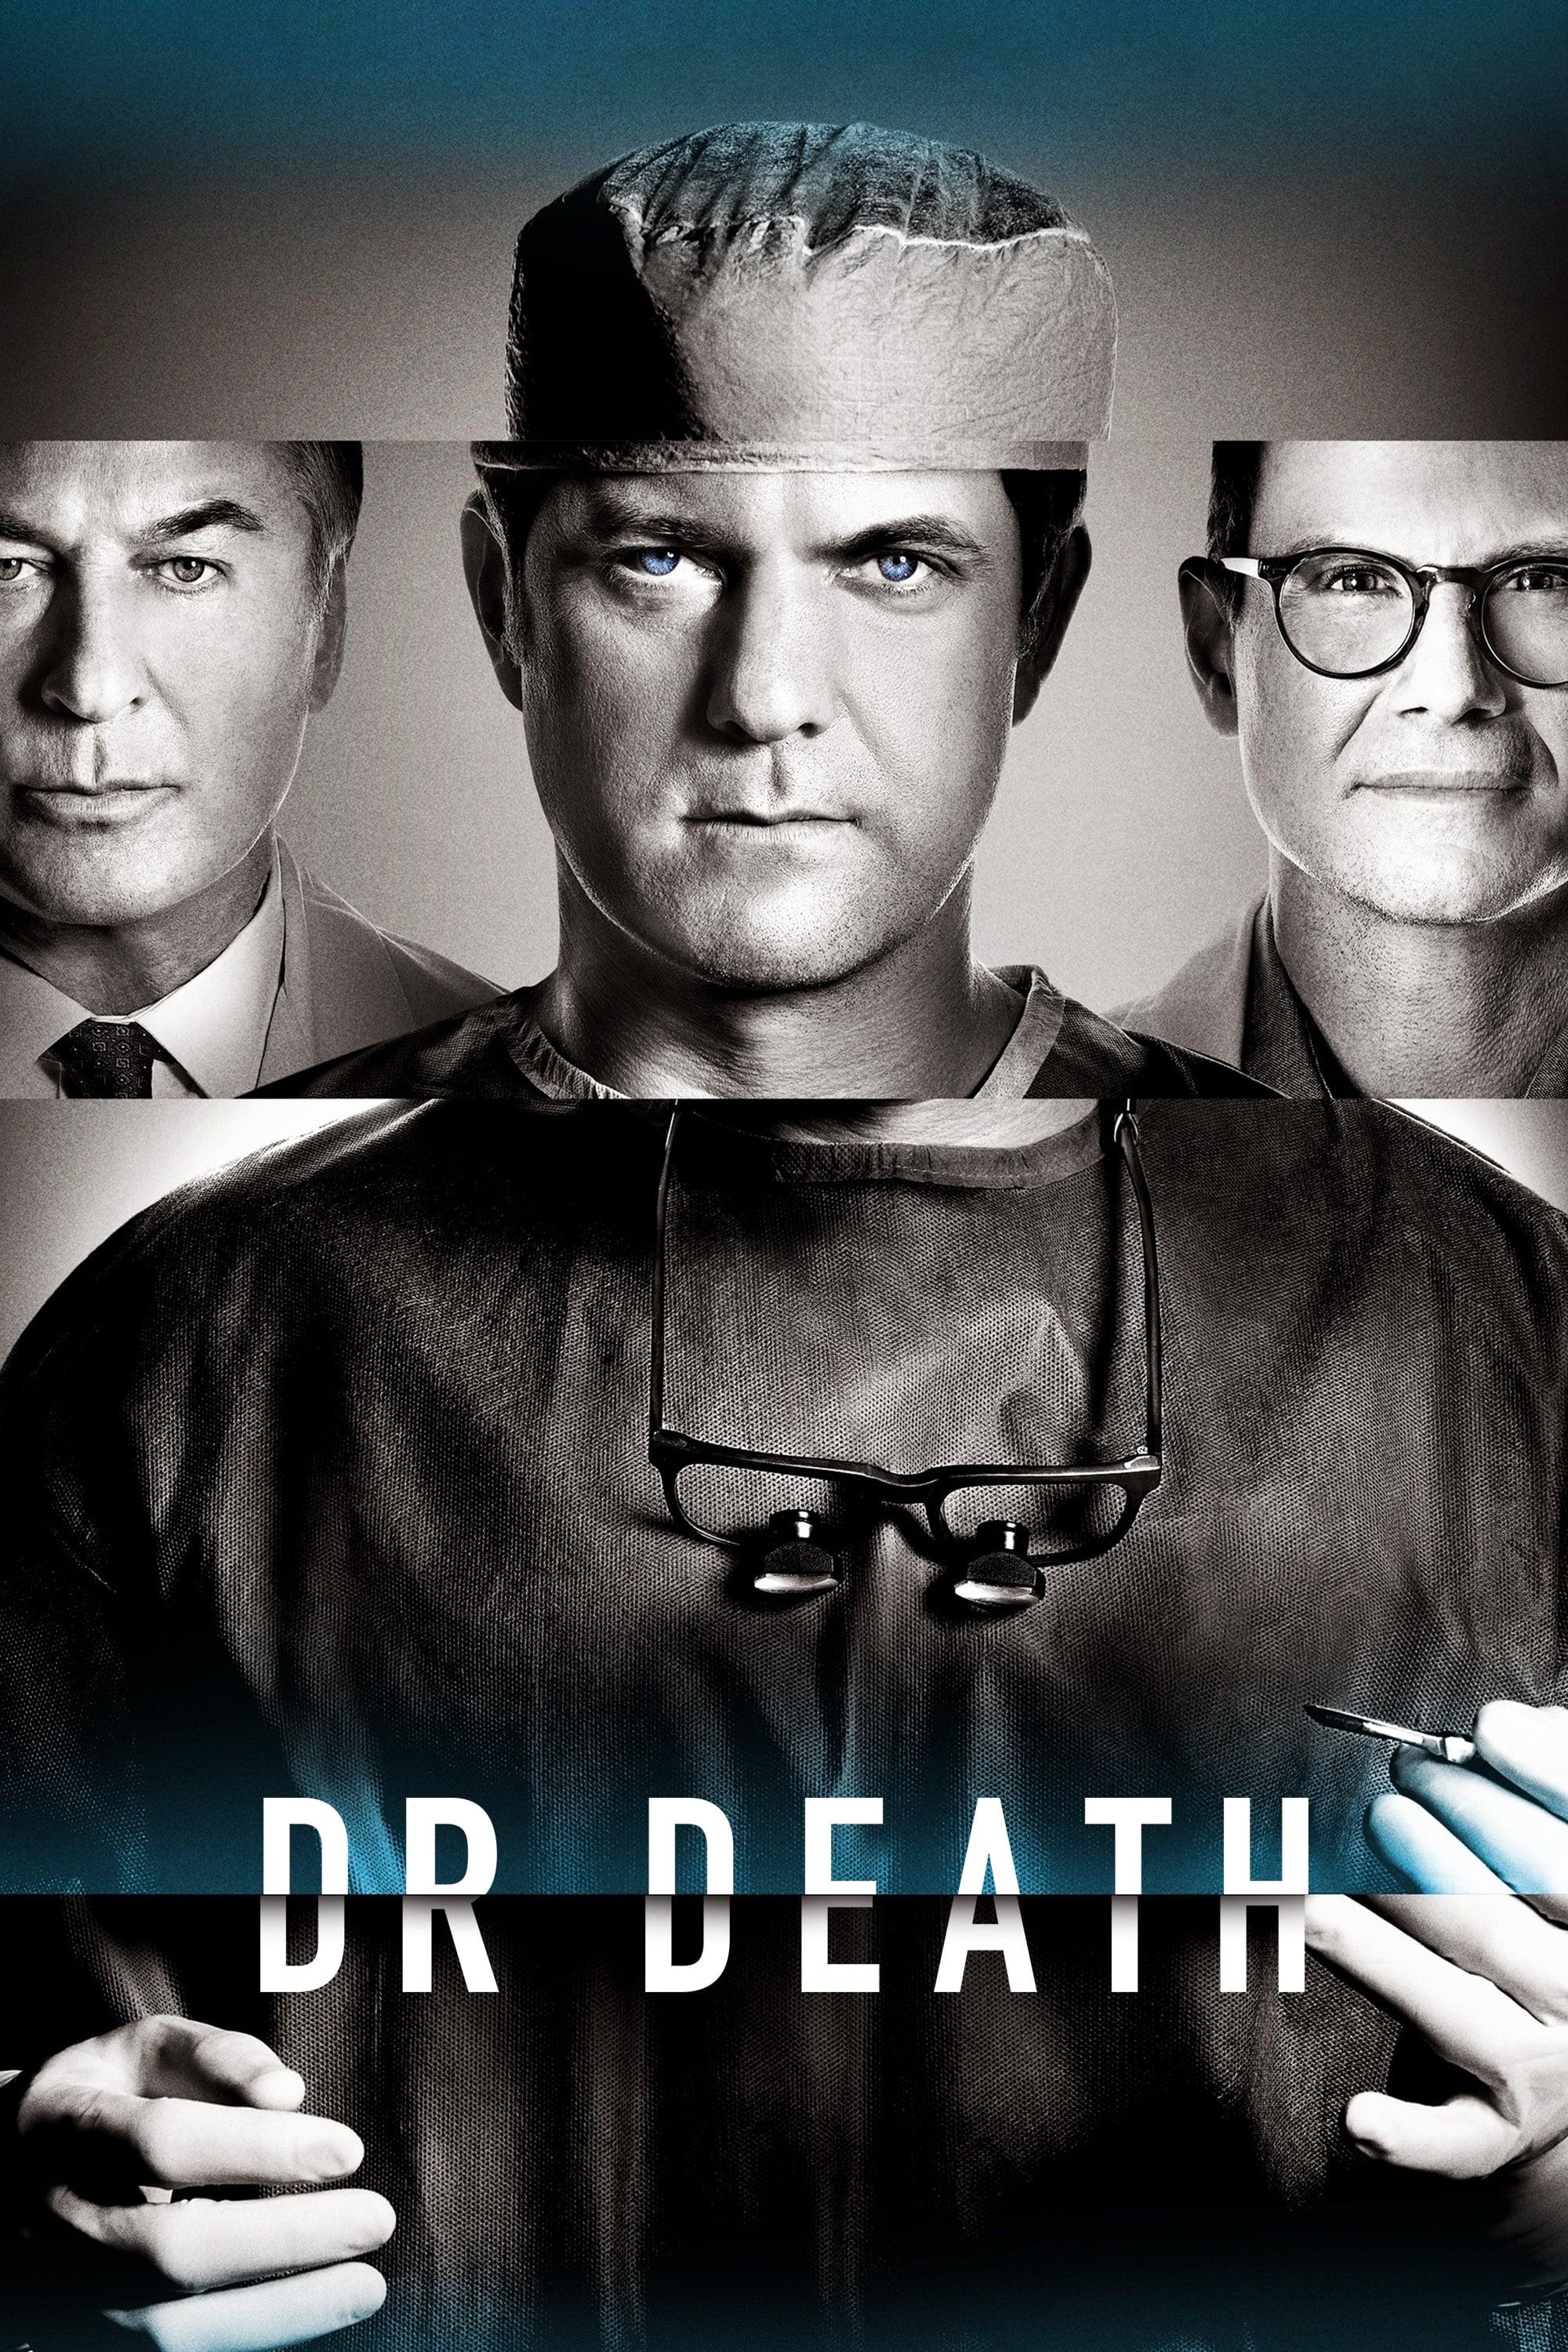 Dr. Death poster